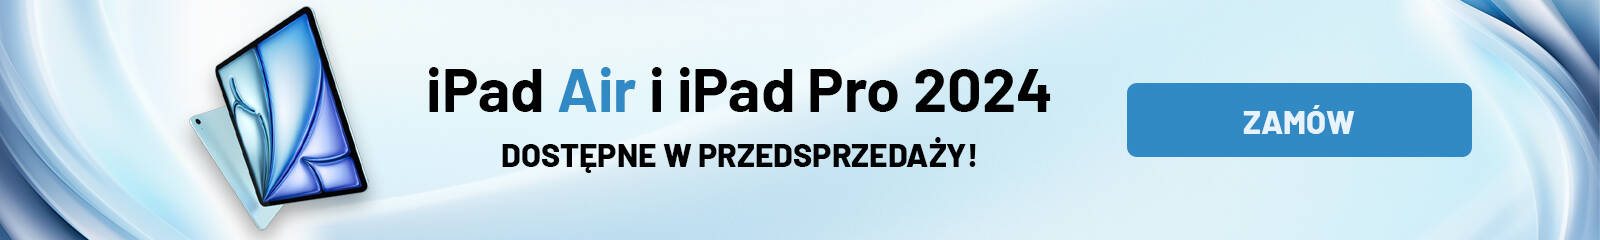 Przedsprzeda iPad Air / iPad Pro